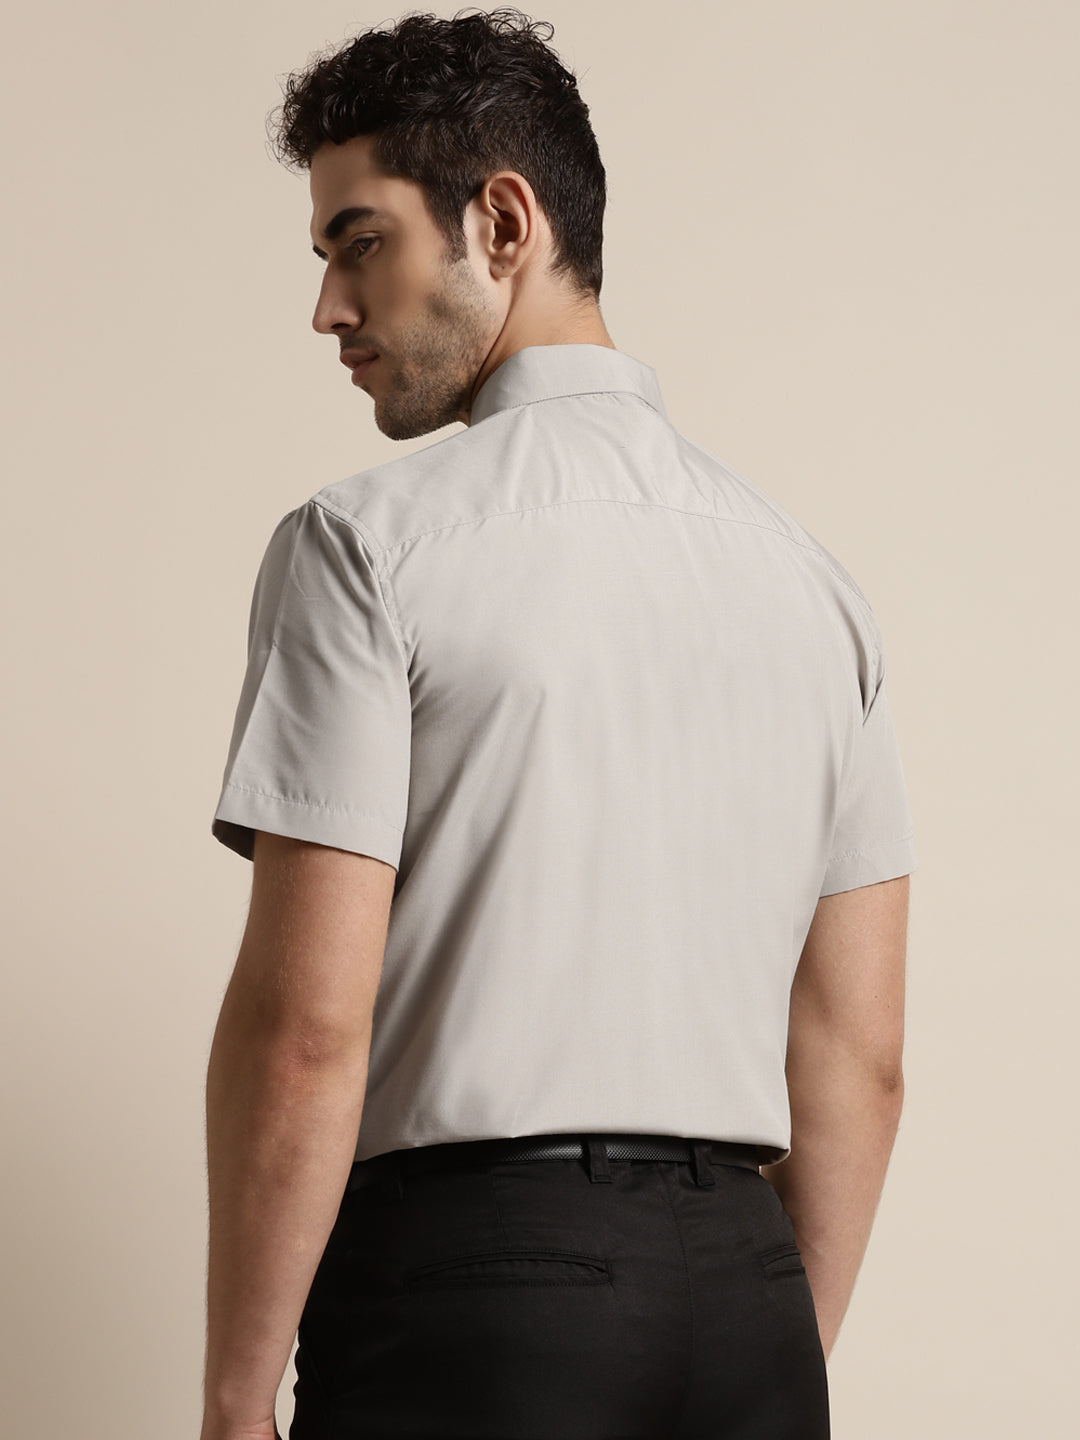 Men's Cotton Light Brown Half sleeves Casual Shirt